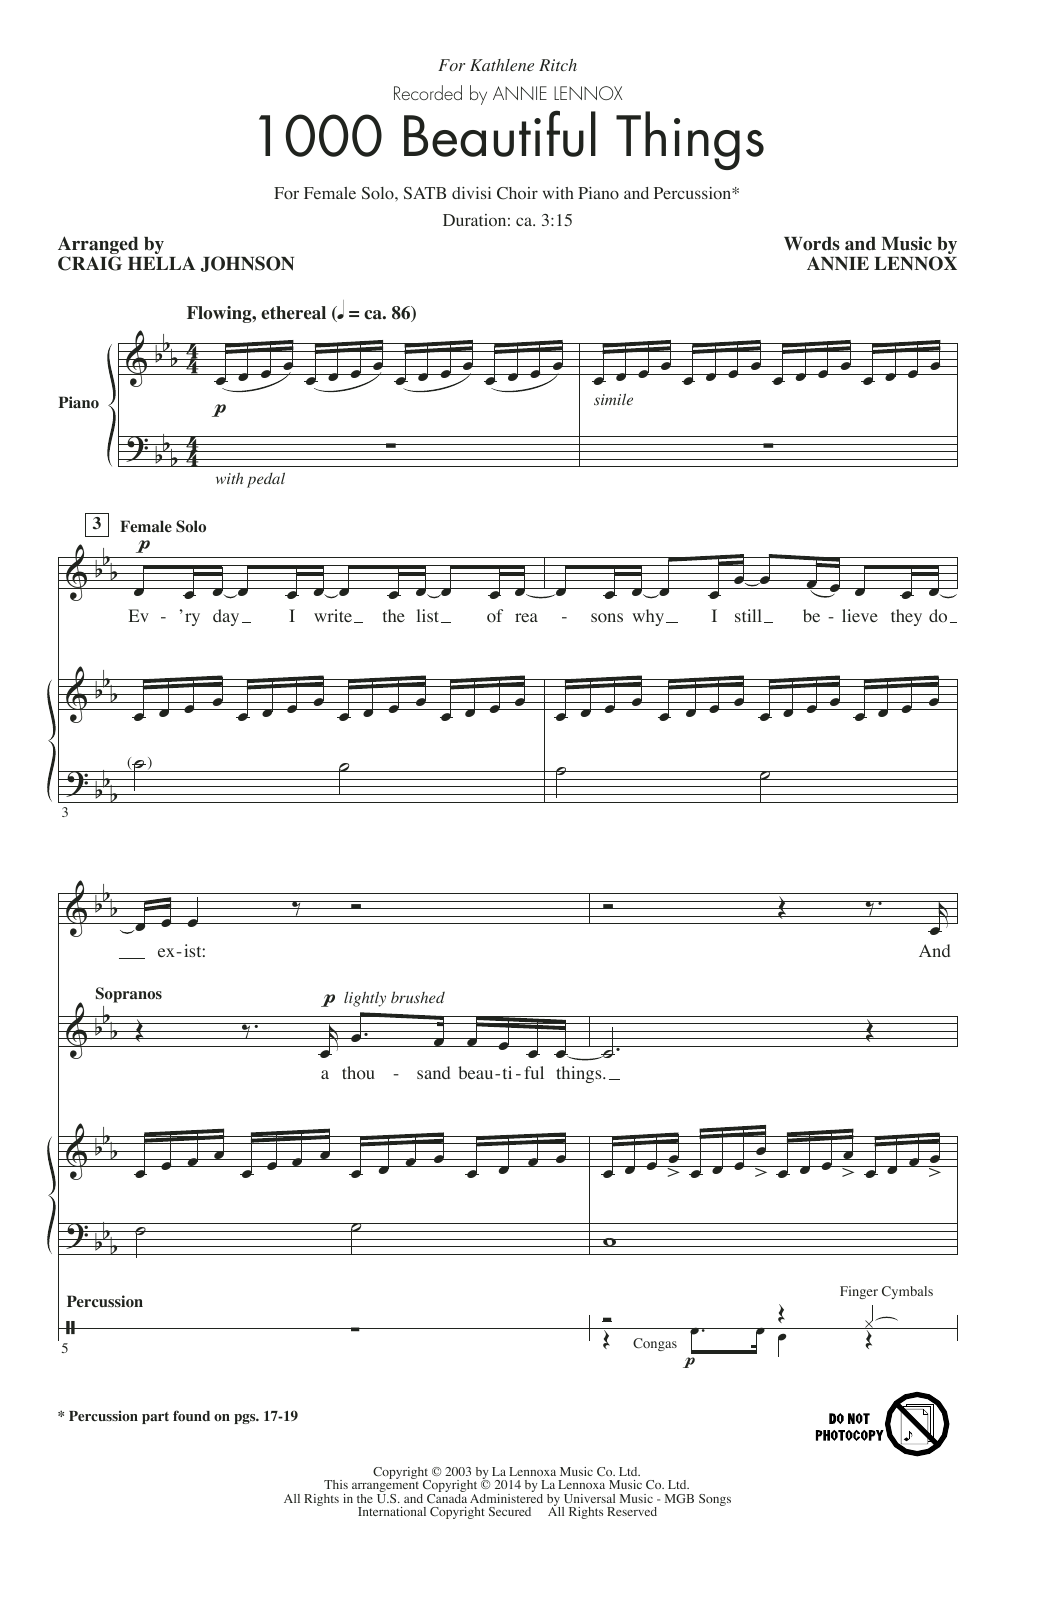 Craig Hella Johnson 1000 Beautiful Things Sheet Music Notes & Chords for Choral SSAATTBB - Download or Print PDF